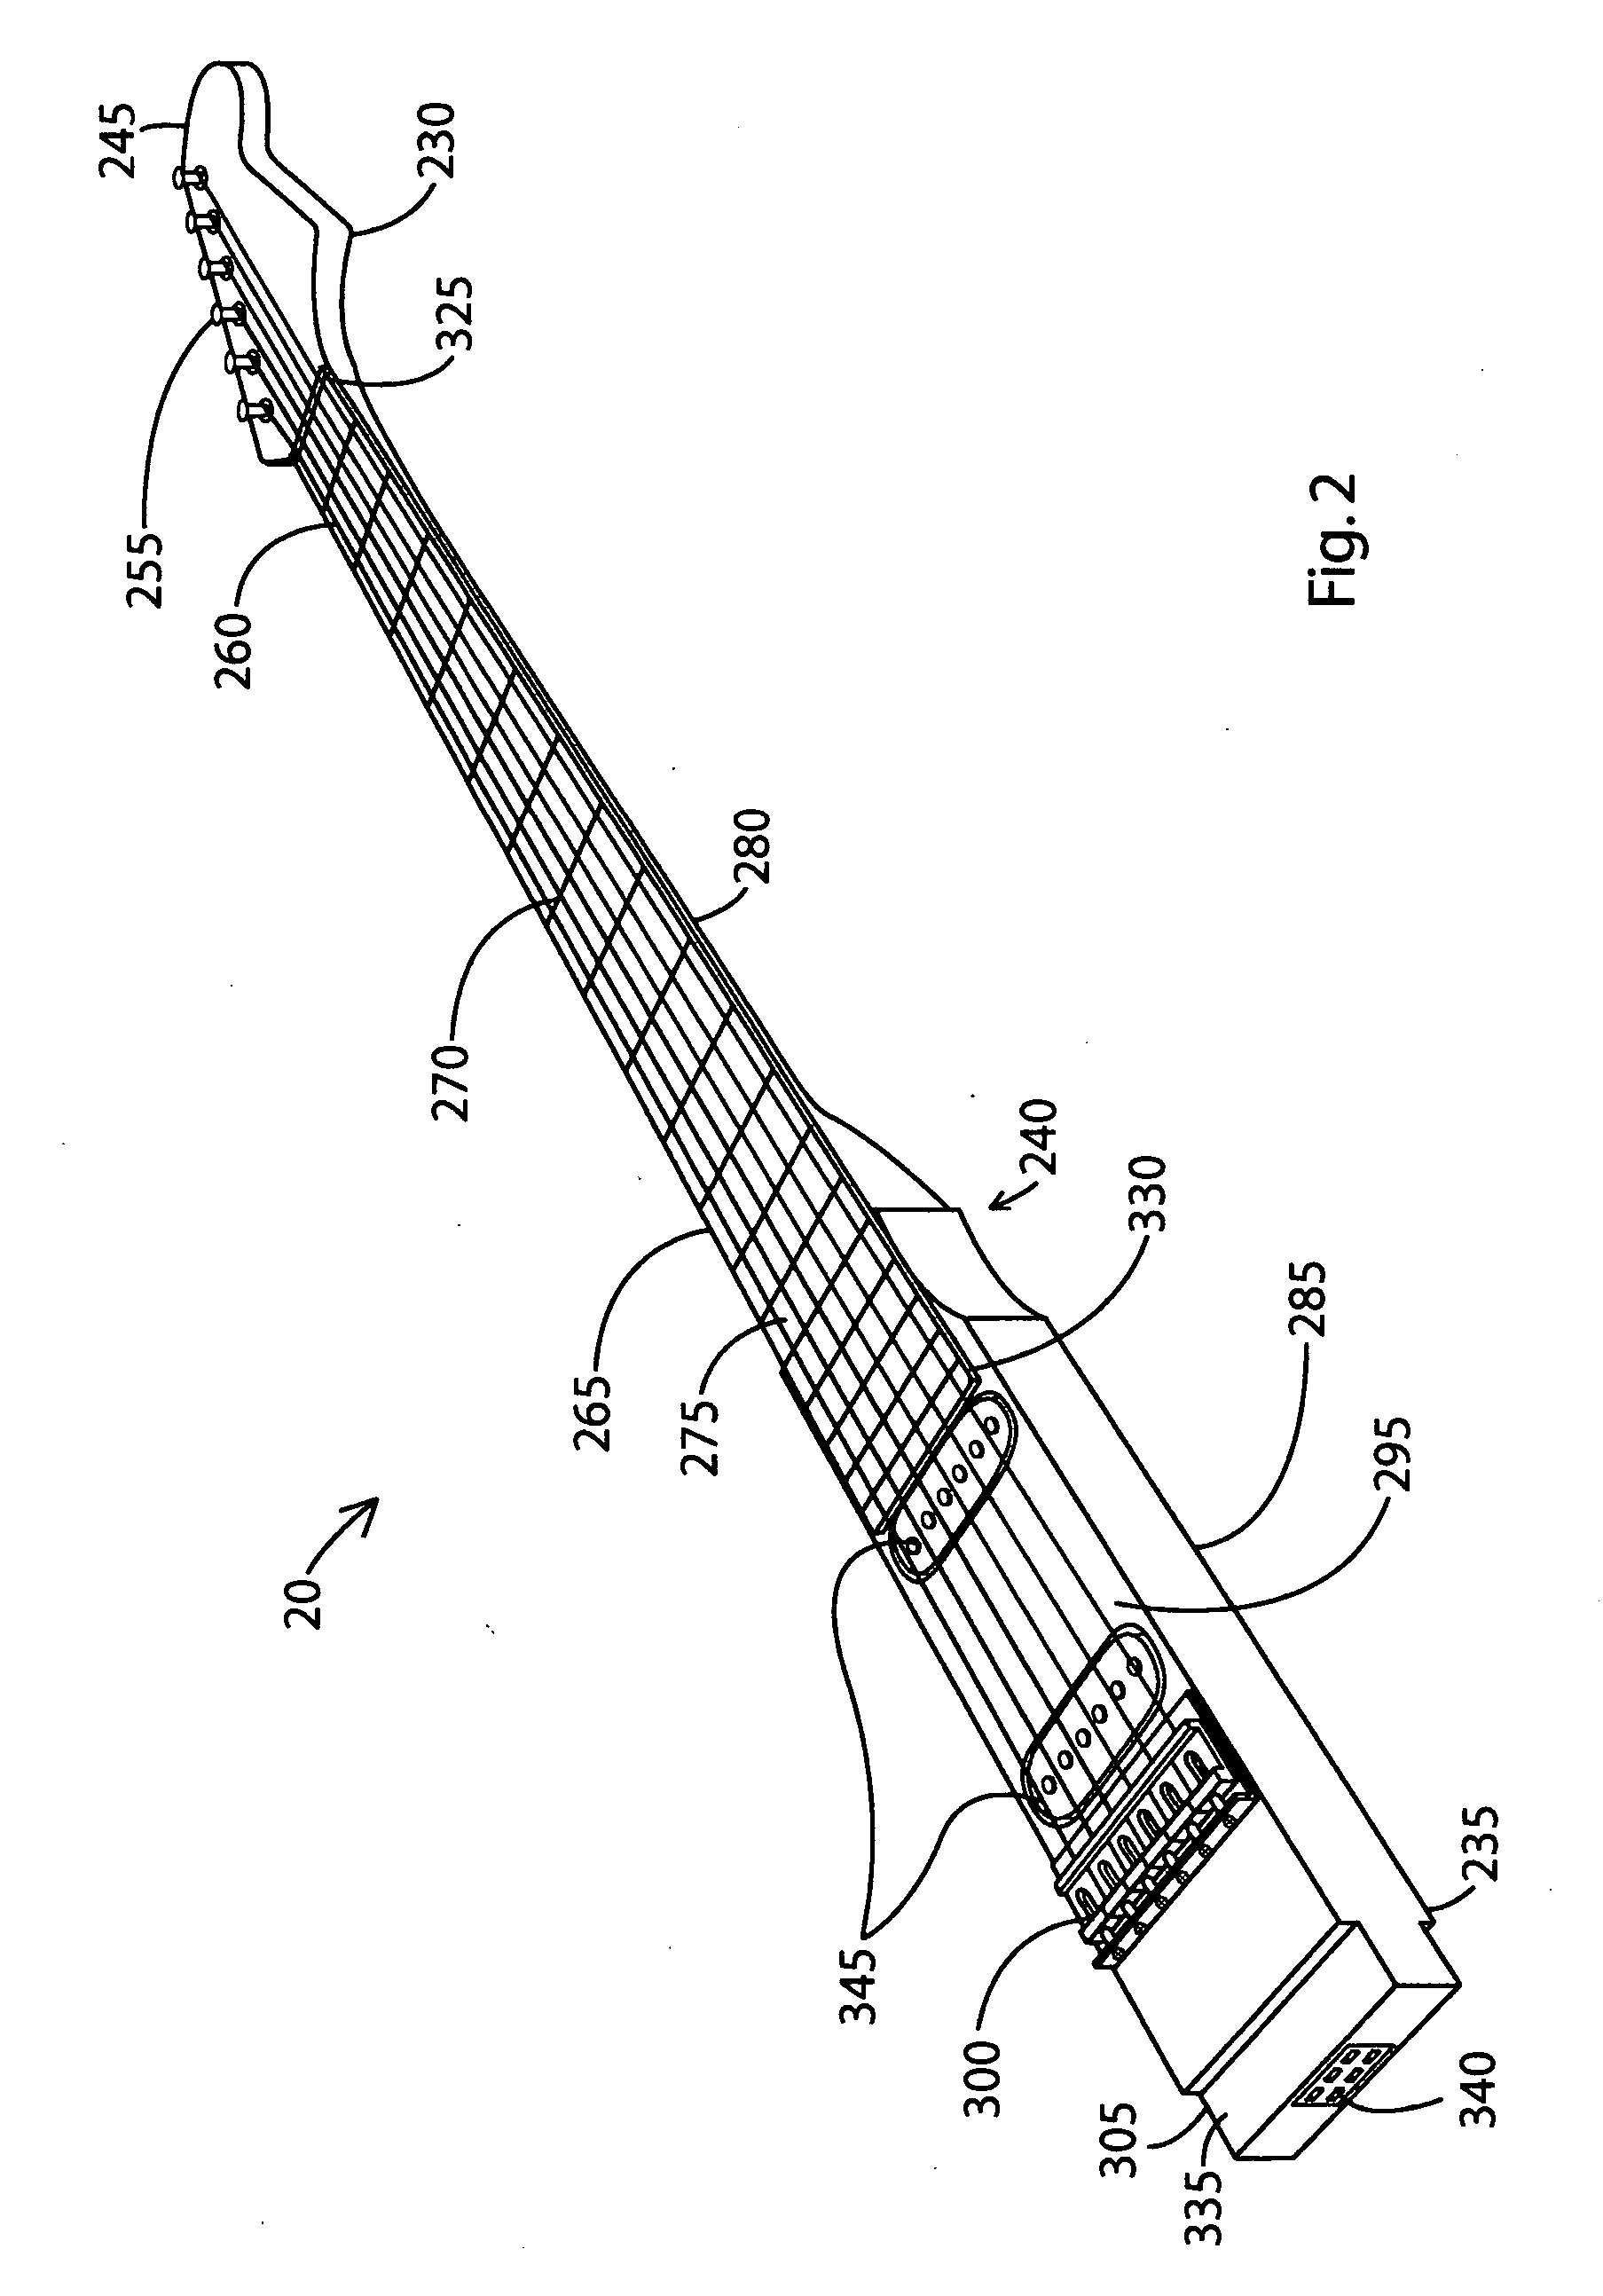 Interchangable and modular acoustic and electric guitar apparatus